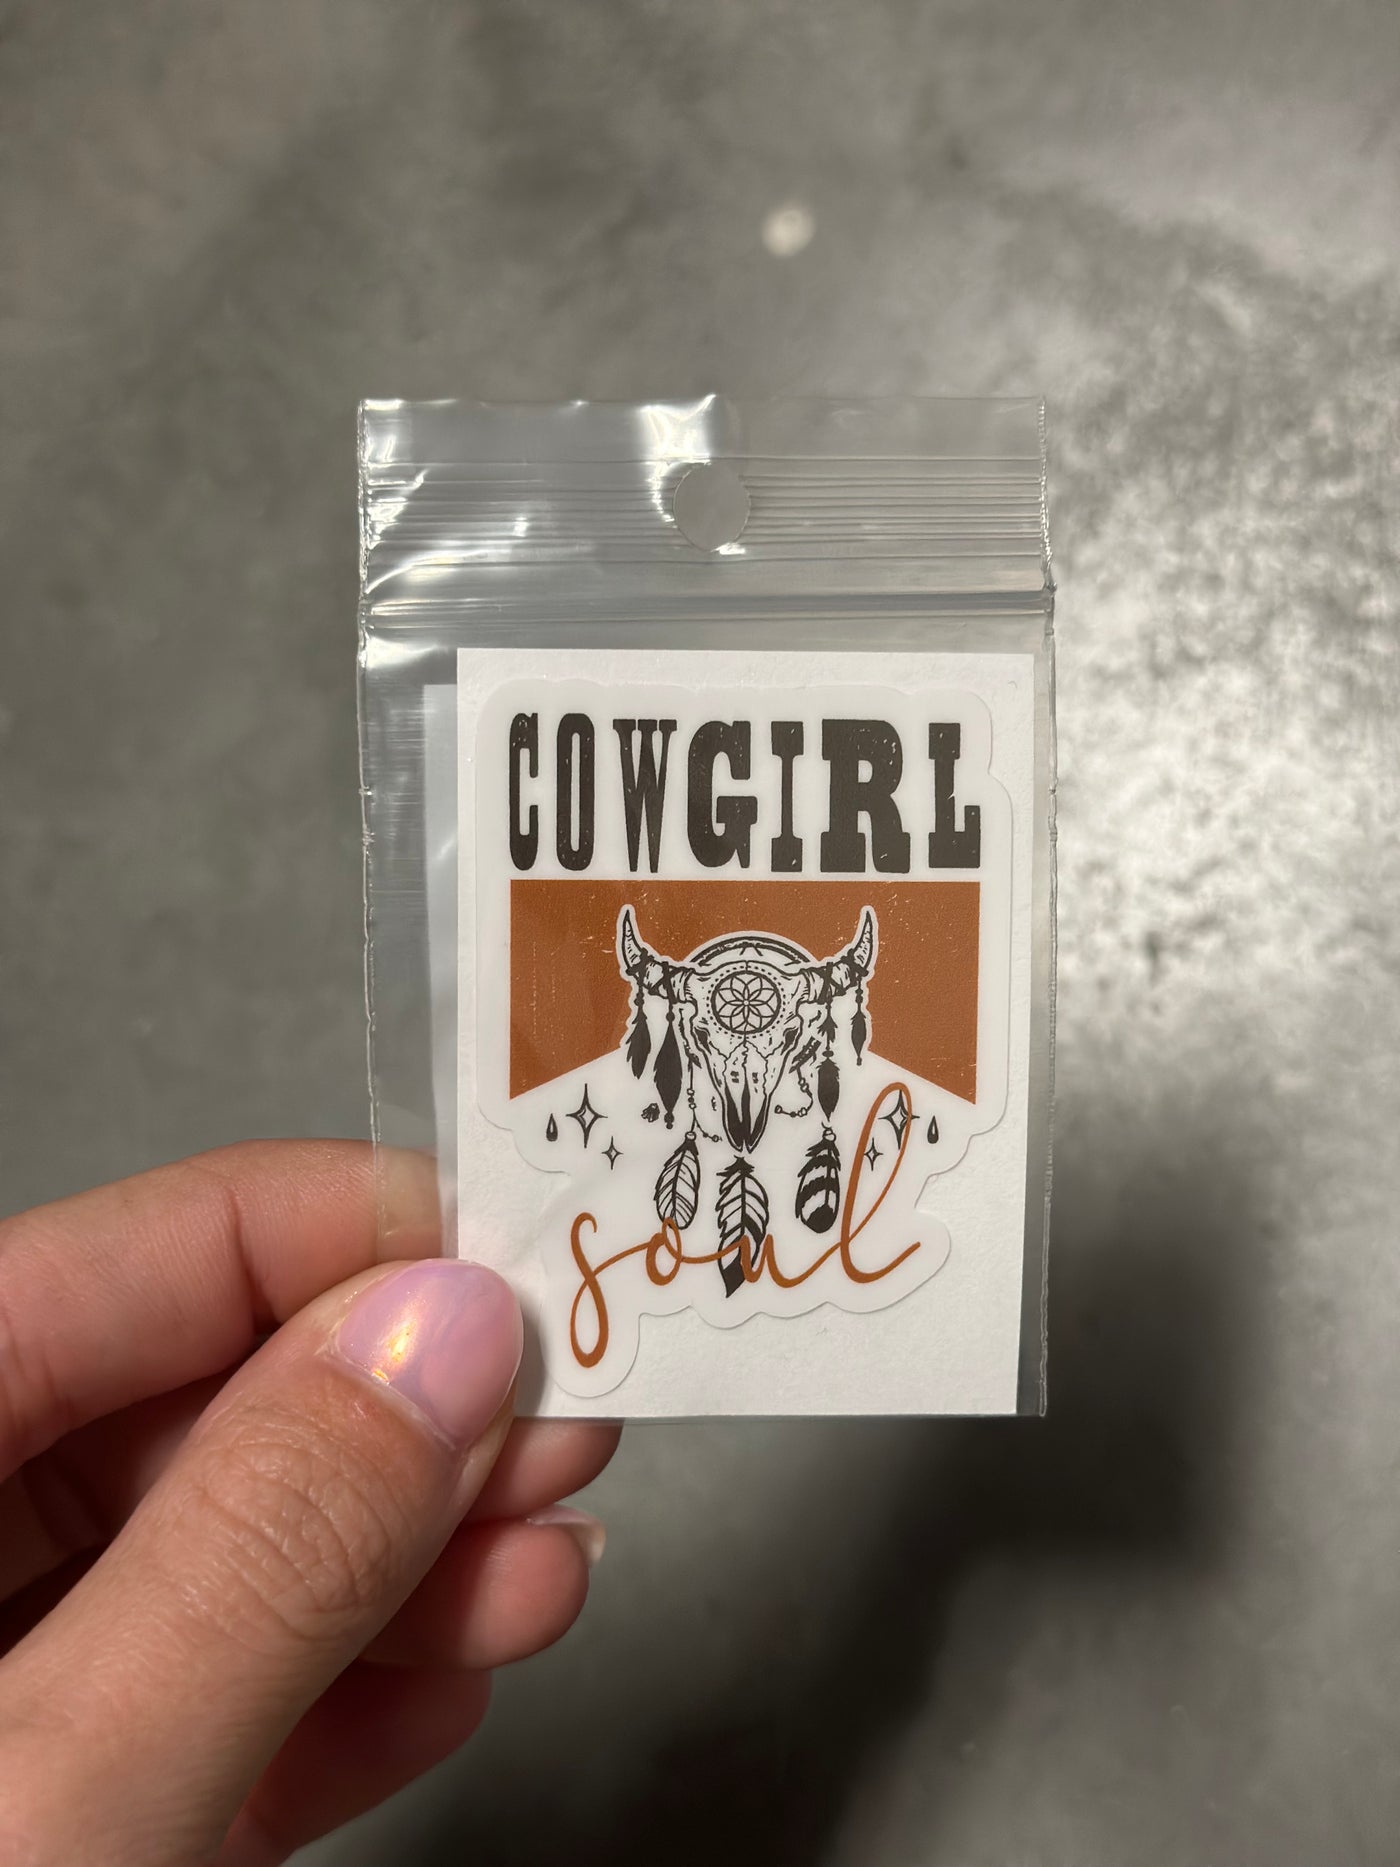 Cowgirl Soul sticker